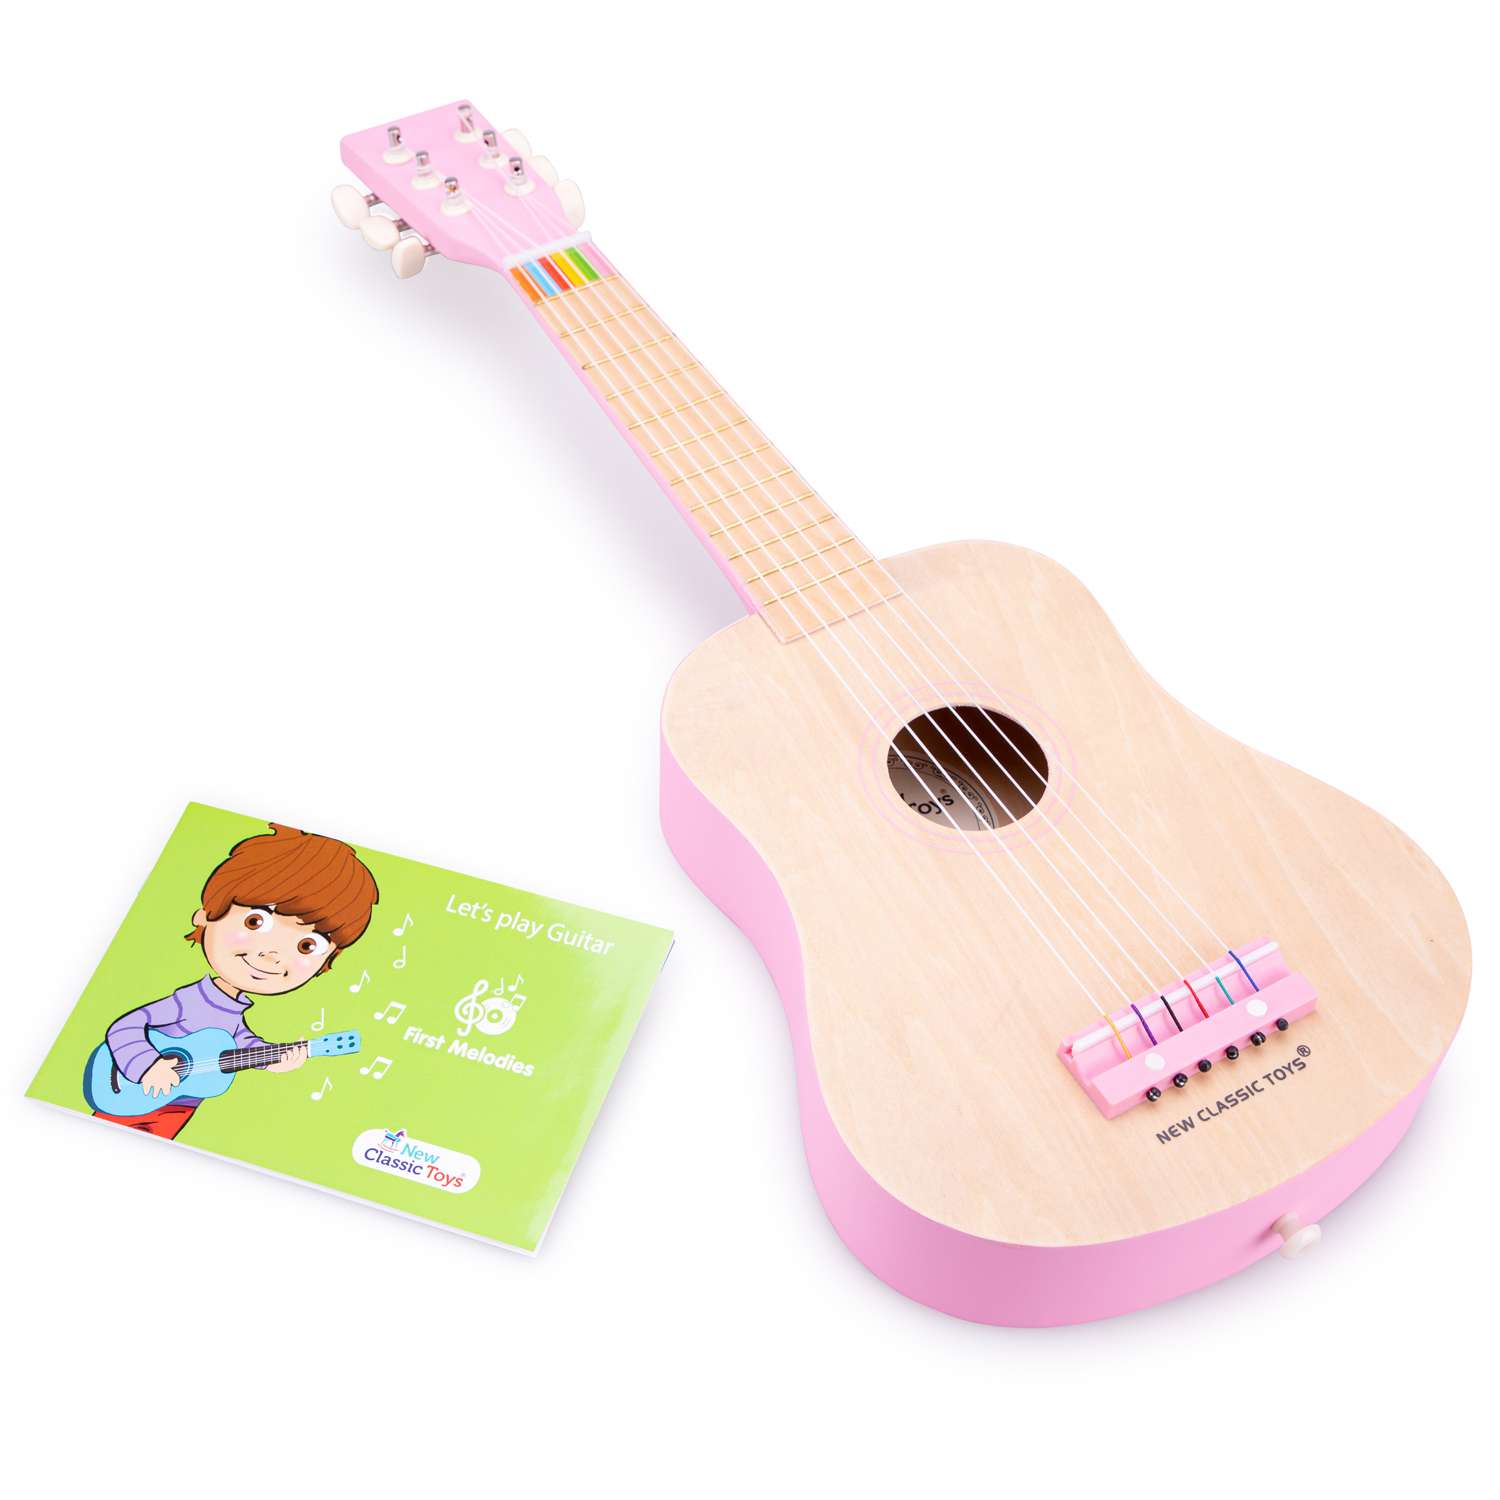 Гитара New Classic Toys 64 см. розовая 10302 - фото 2